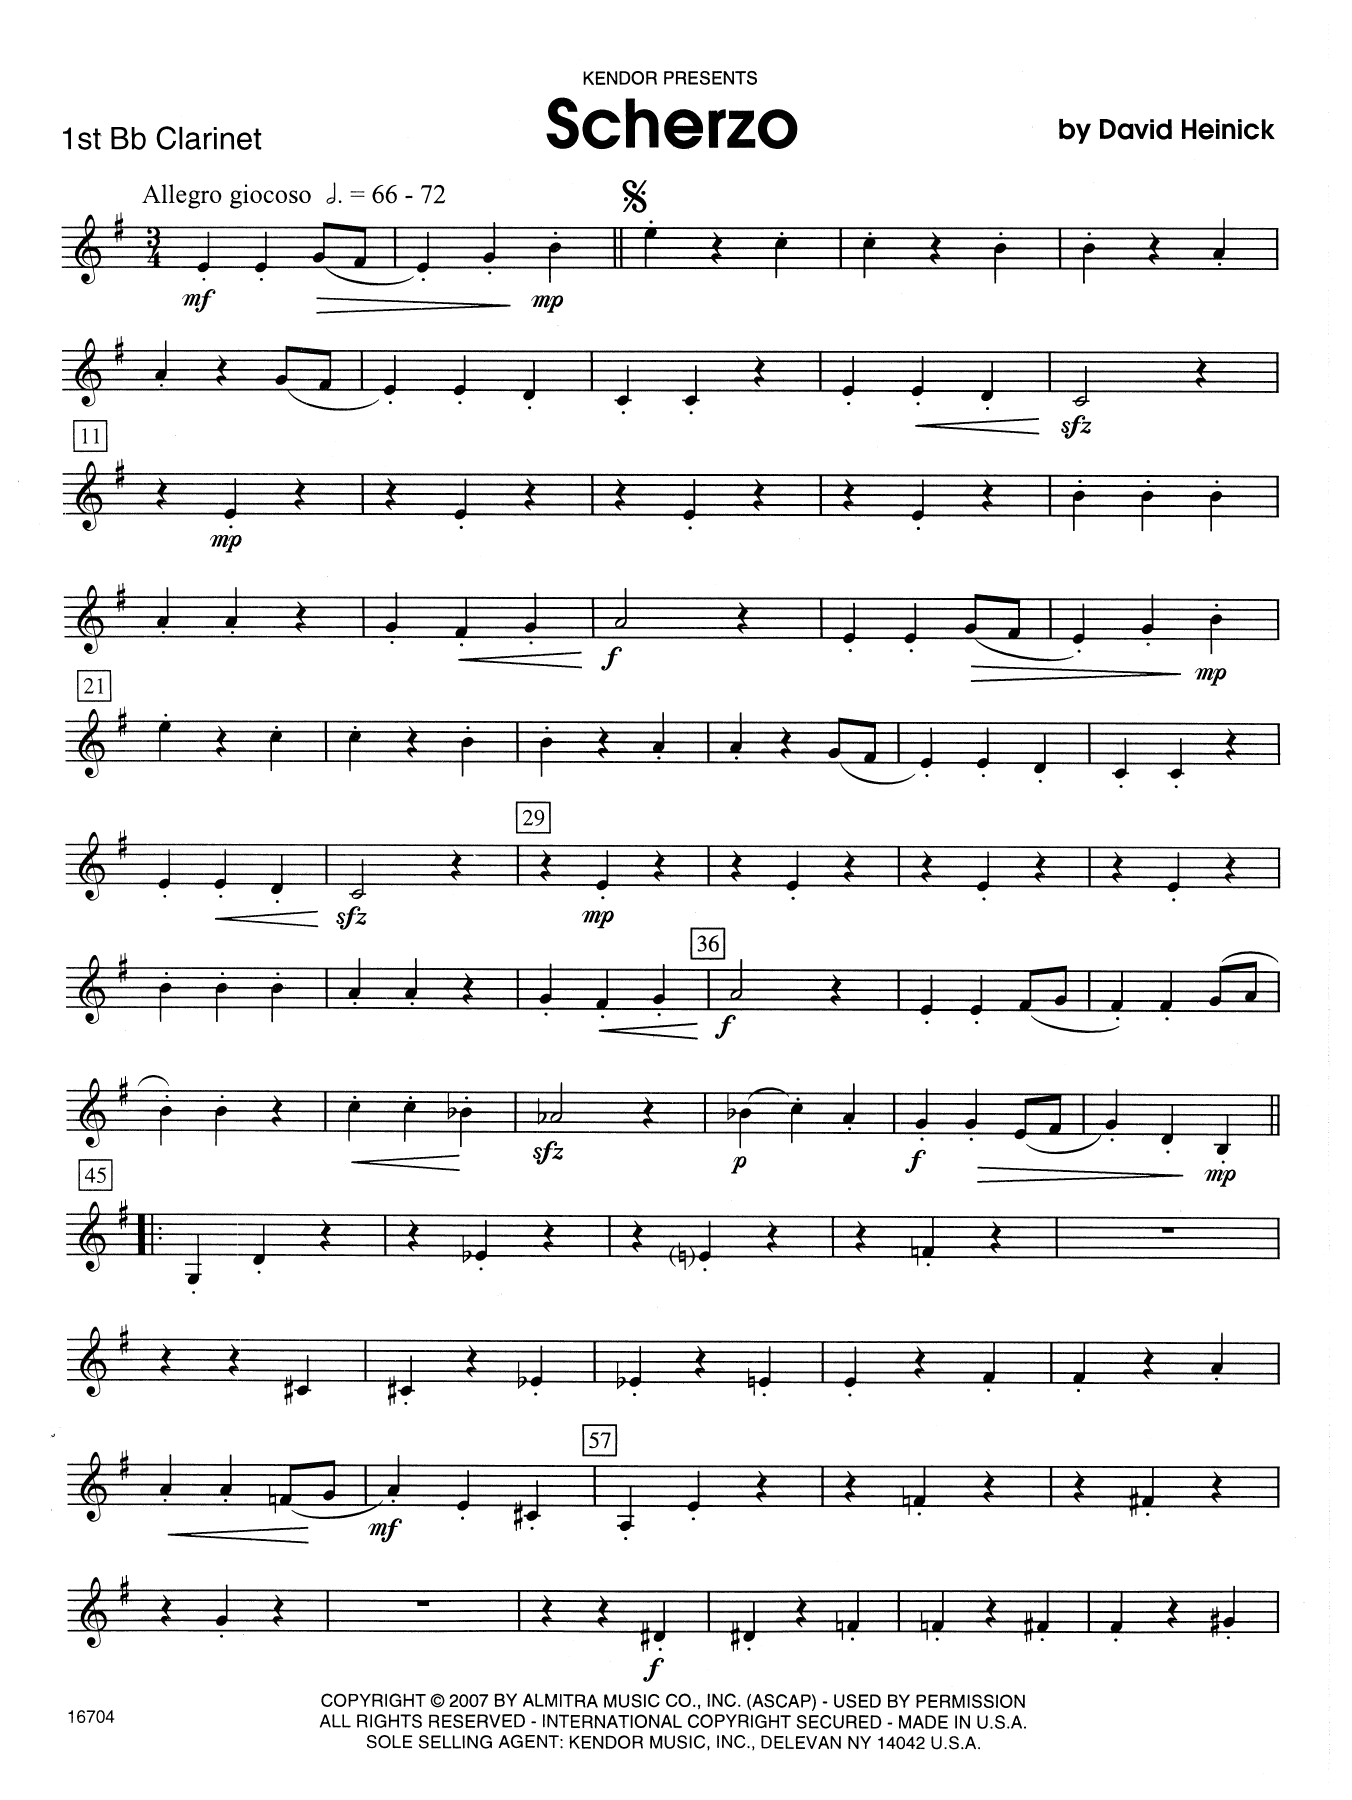 David Heinick Scherzo - 1st Bb Clarinet sheet music notes and chords. Download Printable PDF.